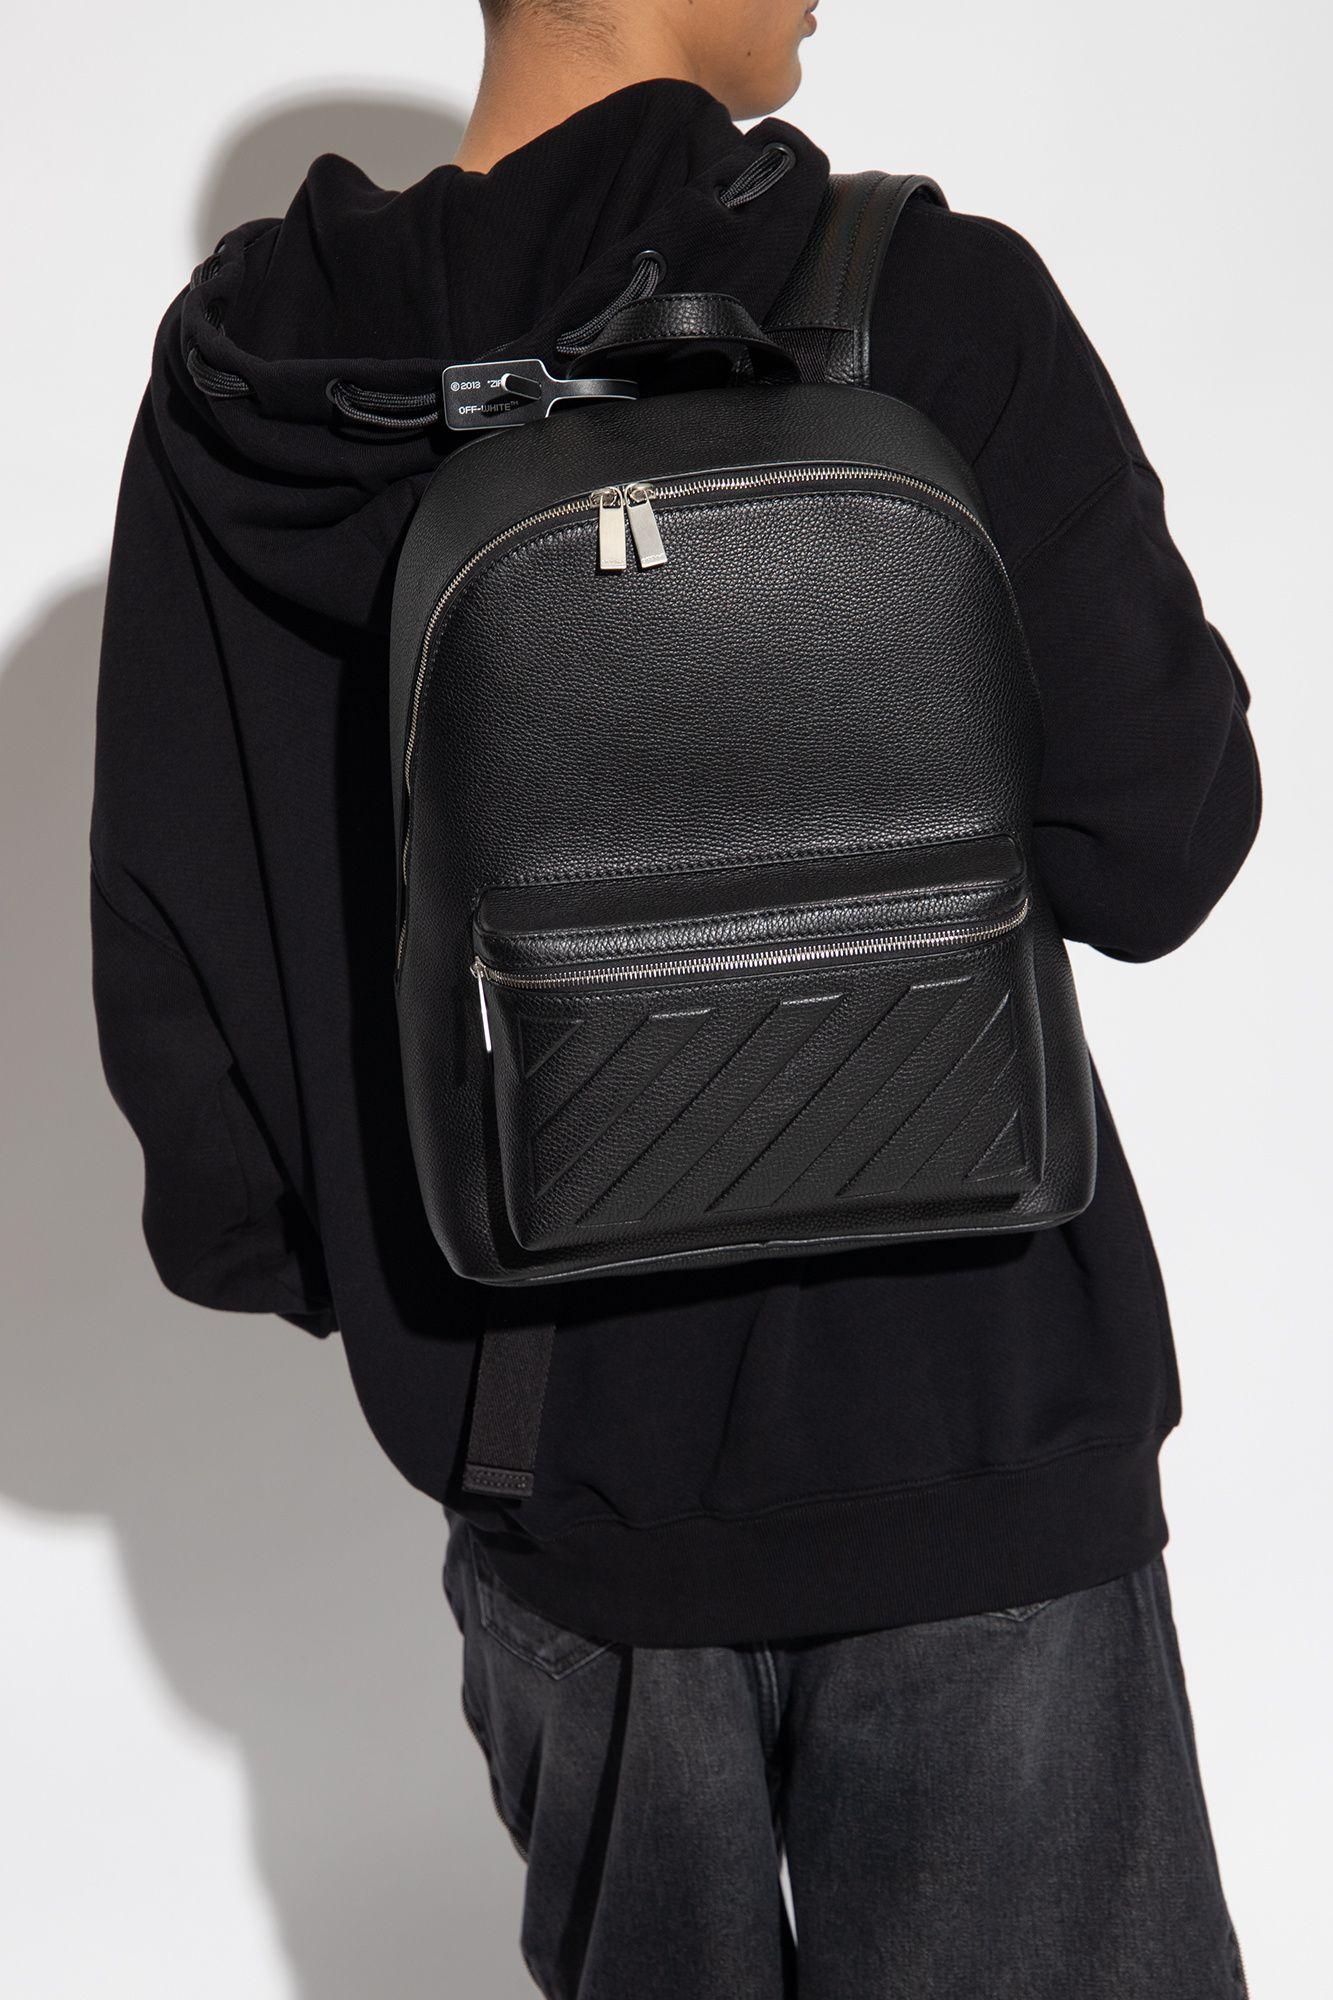 Off-White c/o Virgil Abloh Backpack With Logo in Black for Men